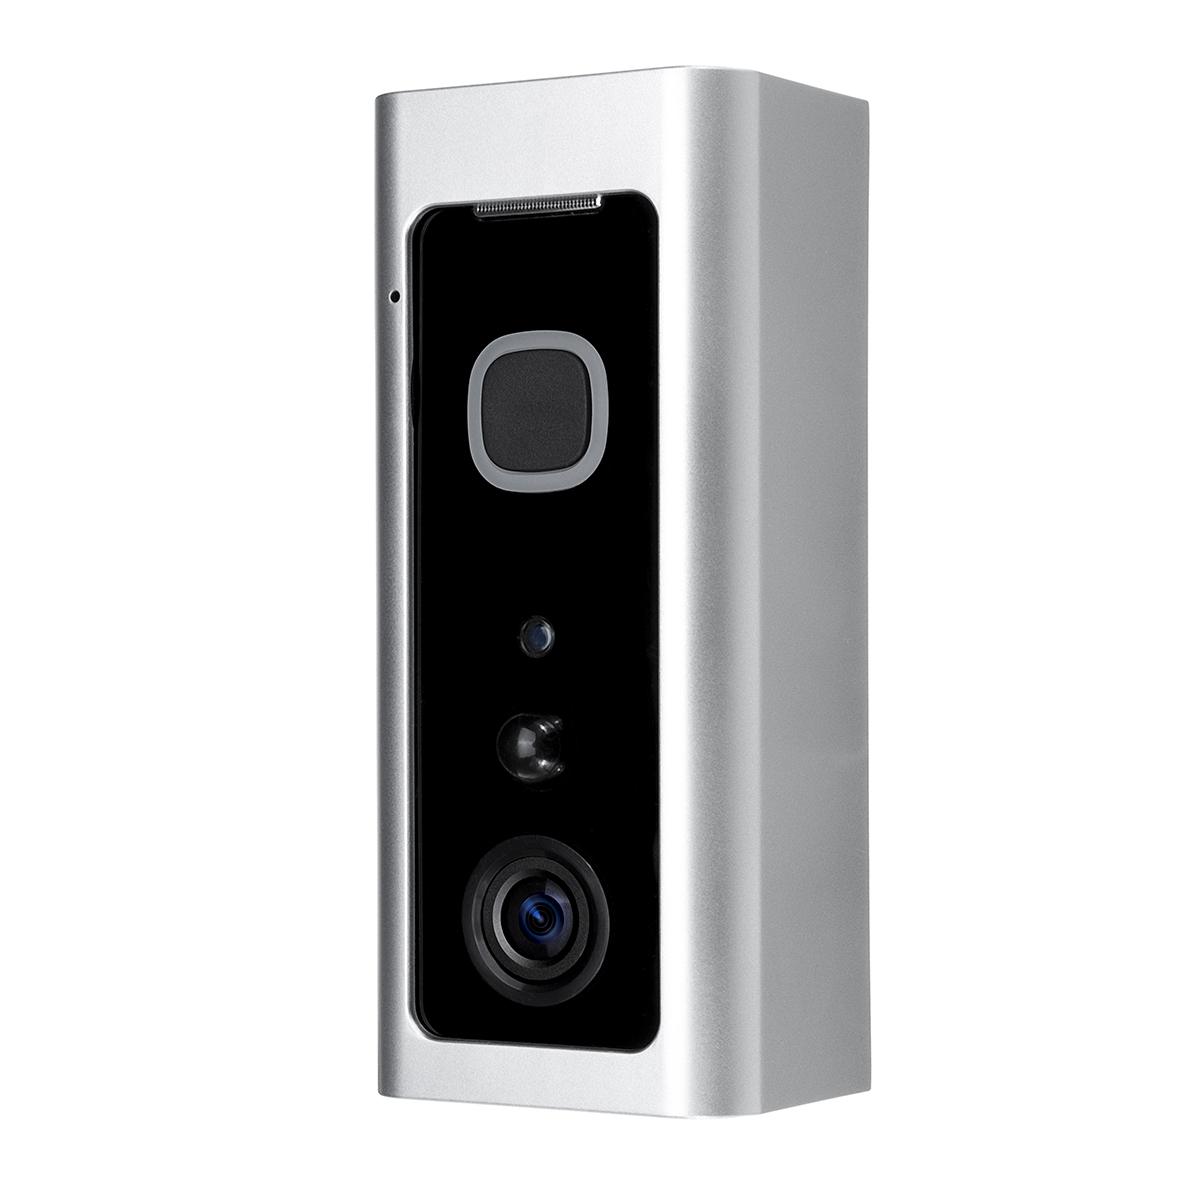 

Smart WiFi Doorbell Camera Video Wireless Remote Door Bell CCTV Chime Phone Remote Video Monitoring Alarm